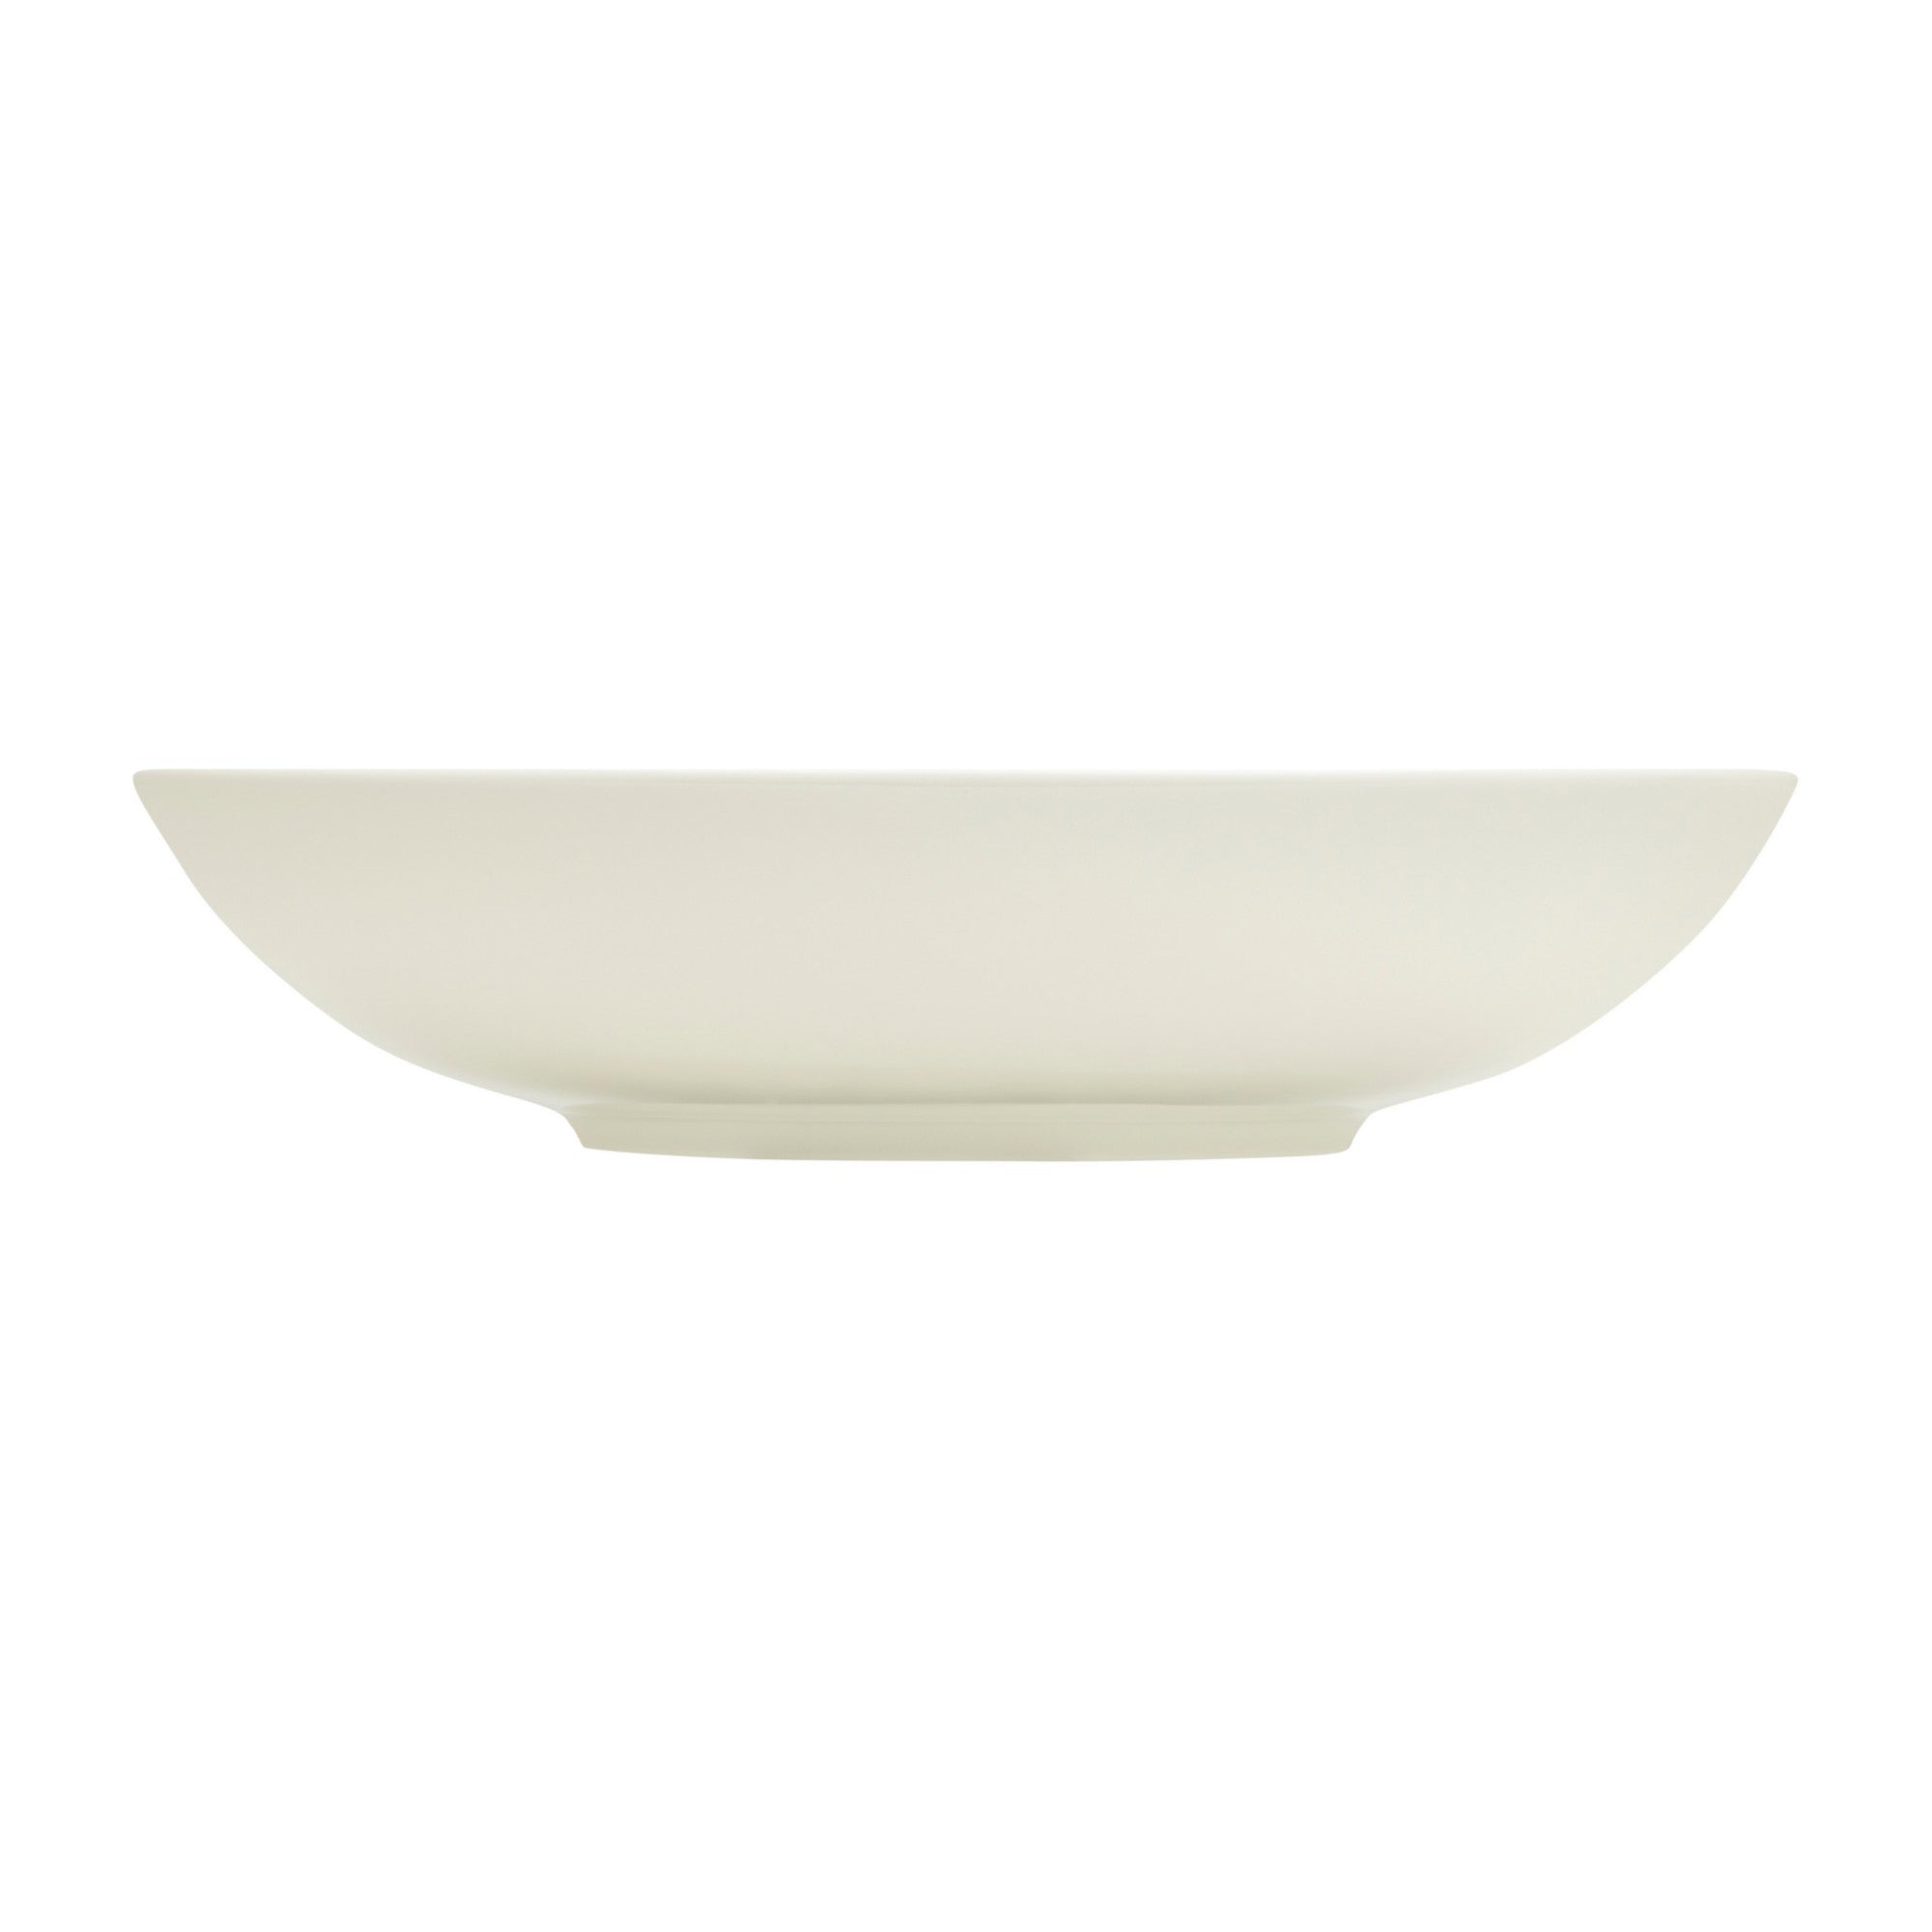 Taika deep plate 20 cm / coupe bowl 8"